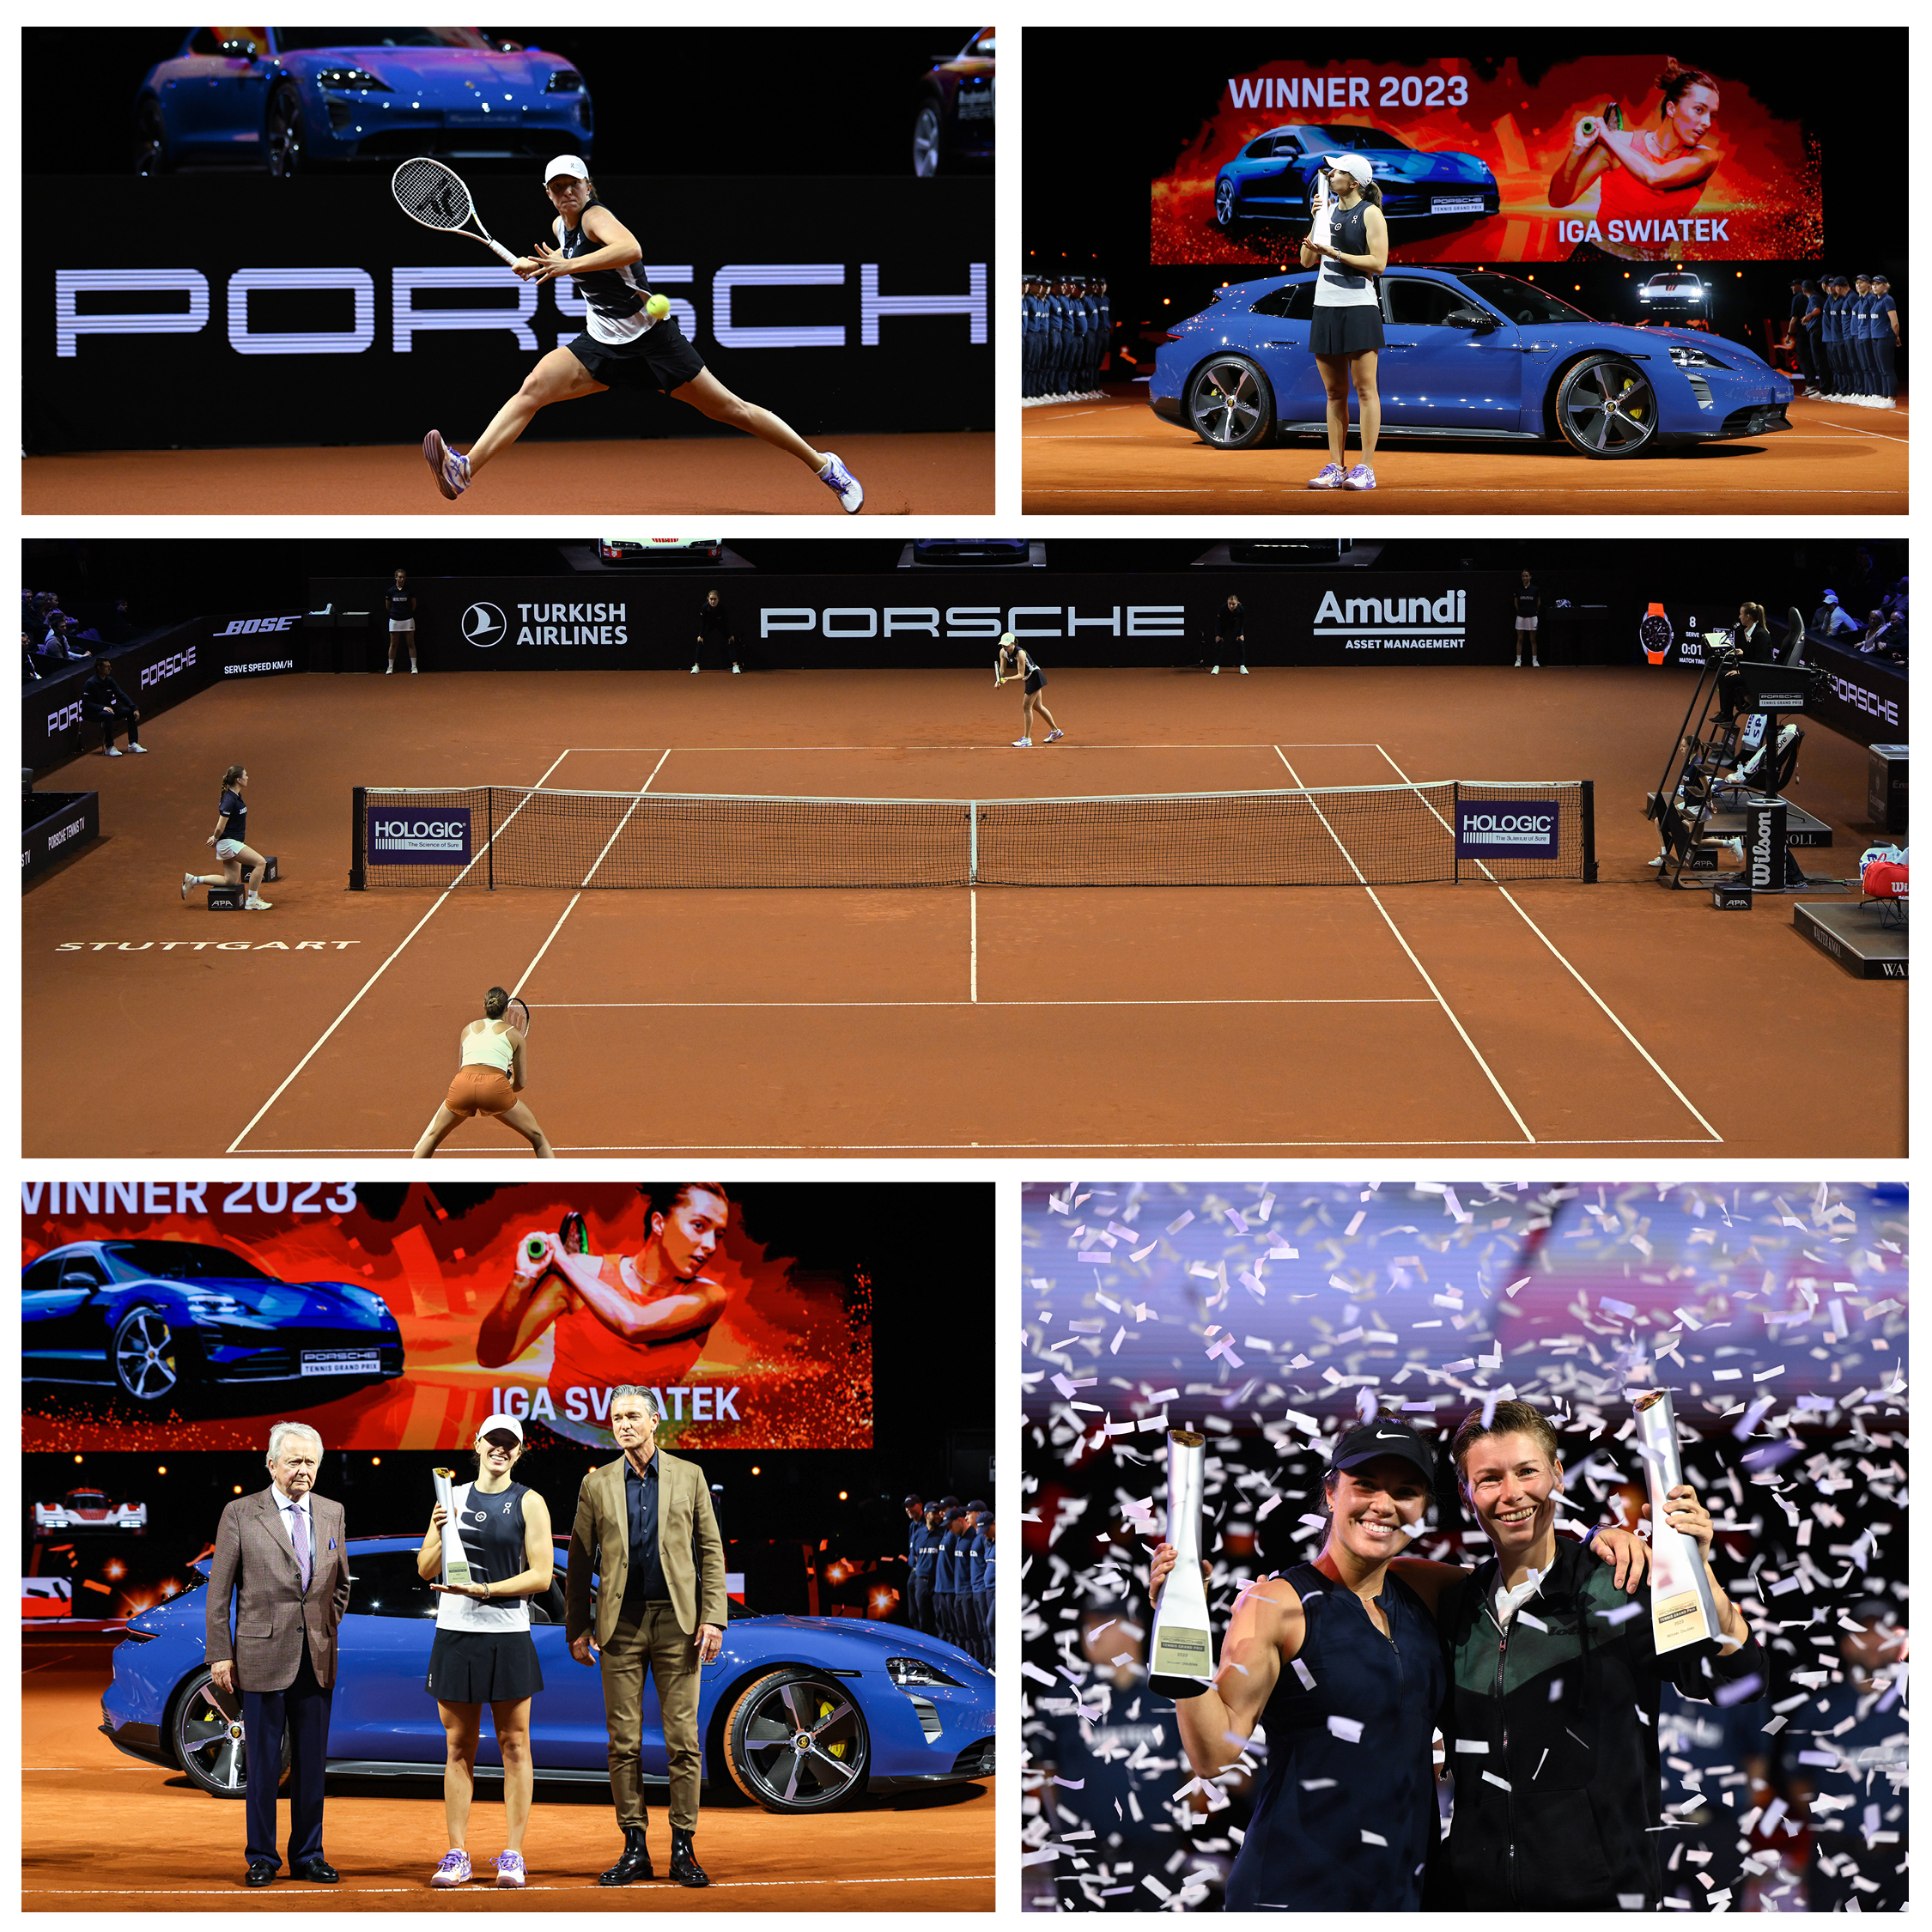 2 big tournaments – famous players – tennis in the #Porsche Arena Stuttgart